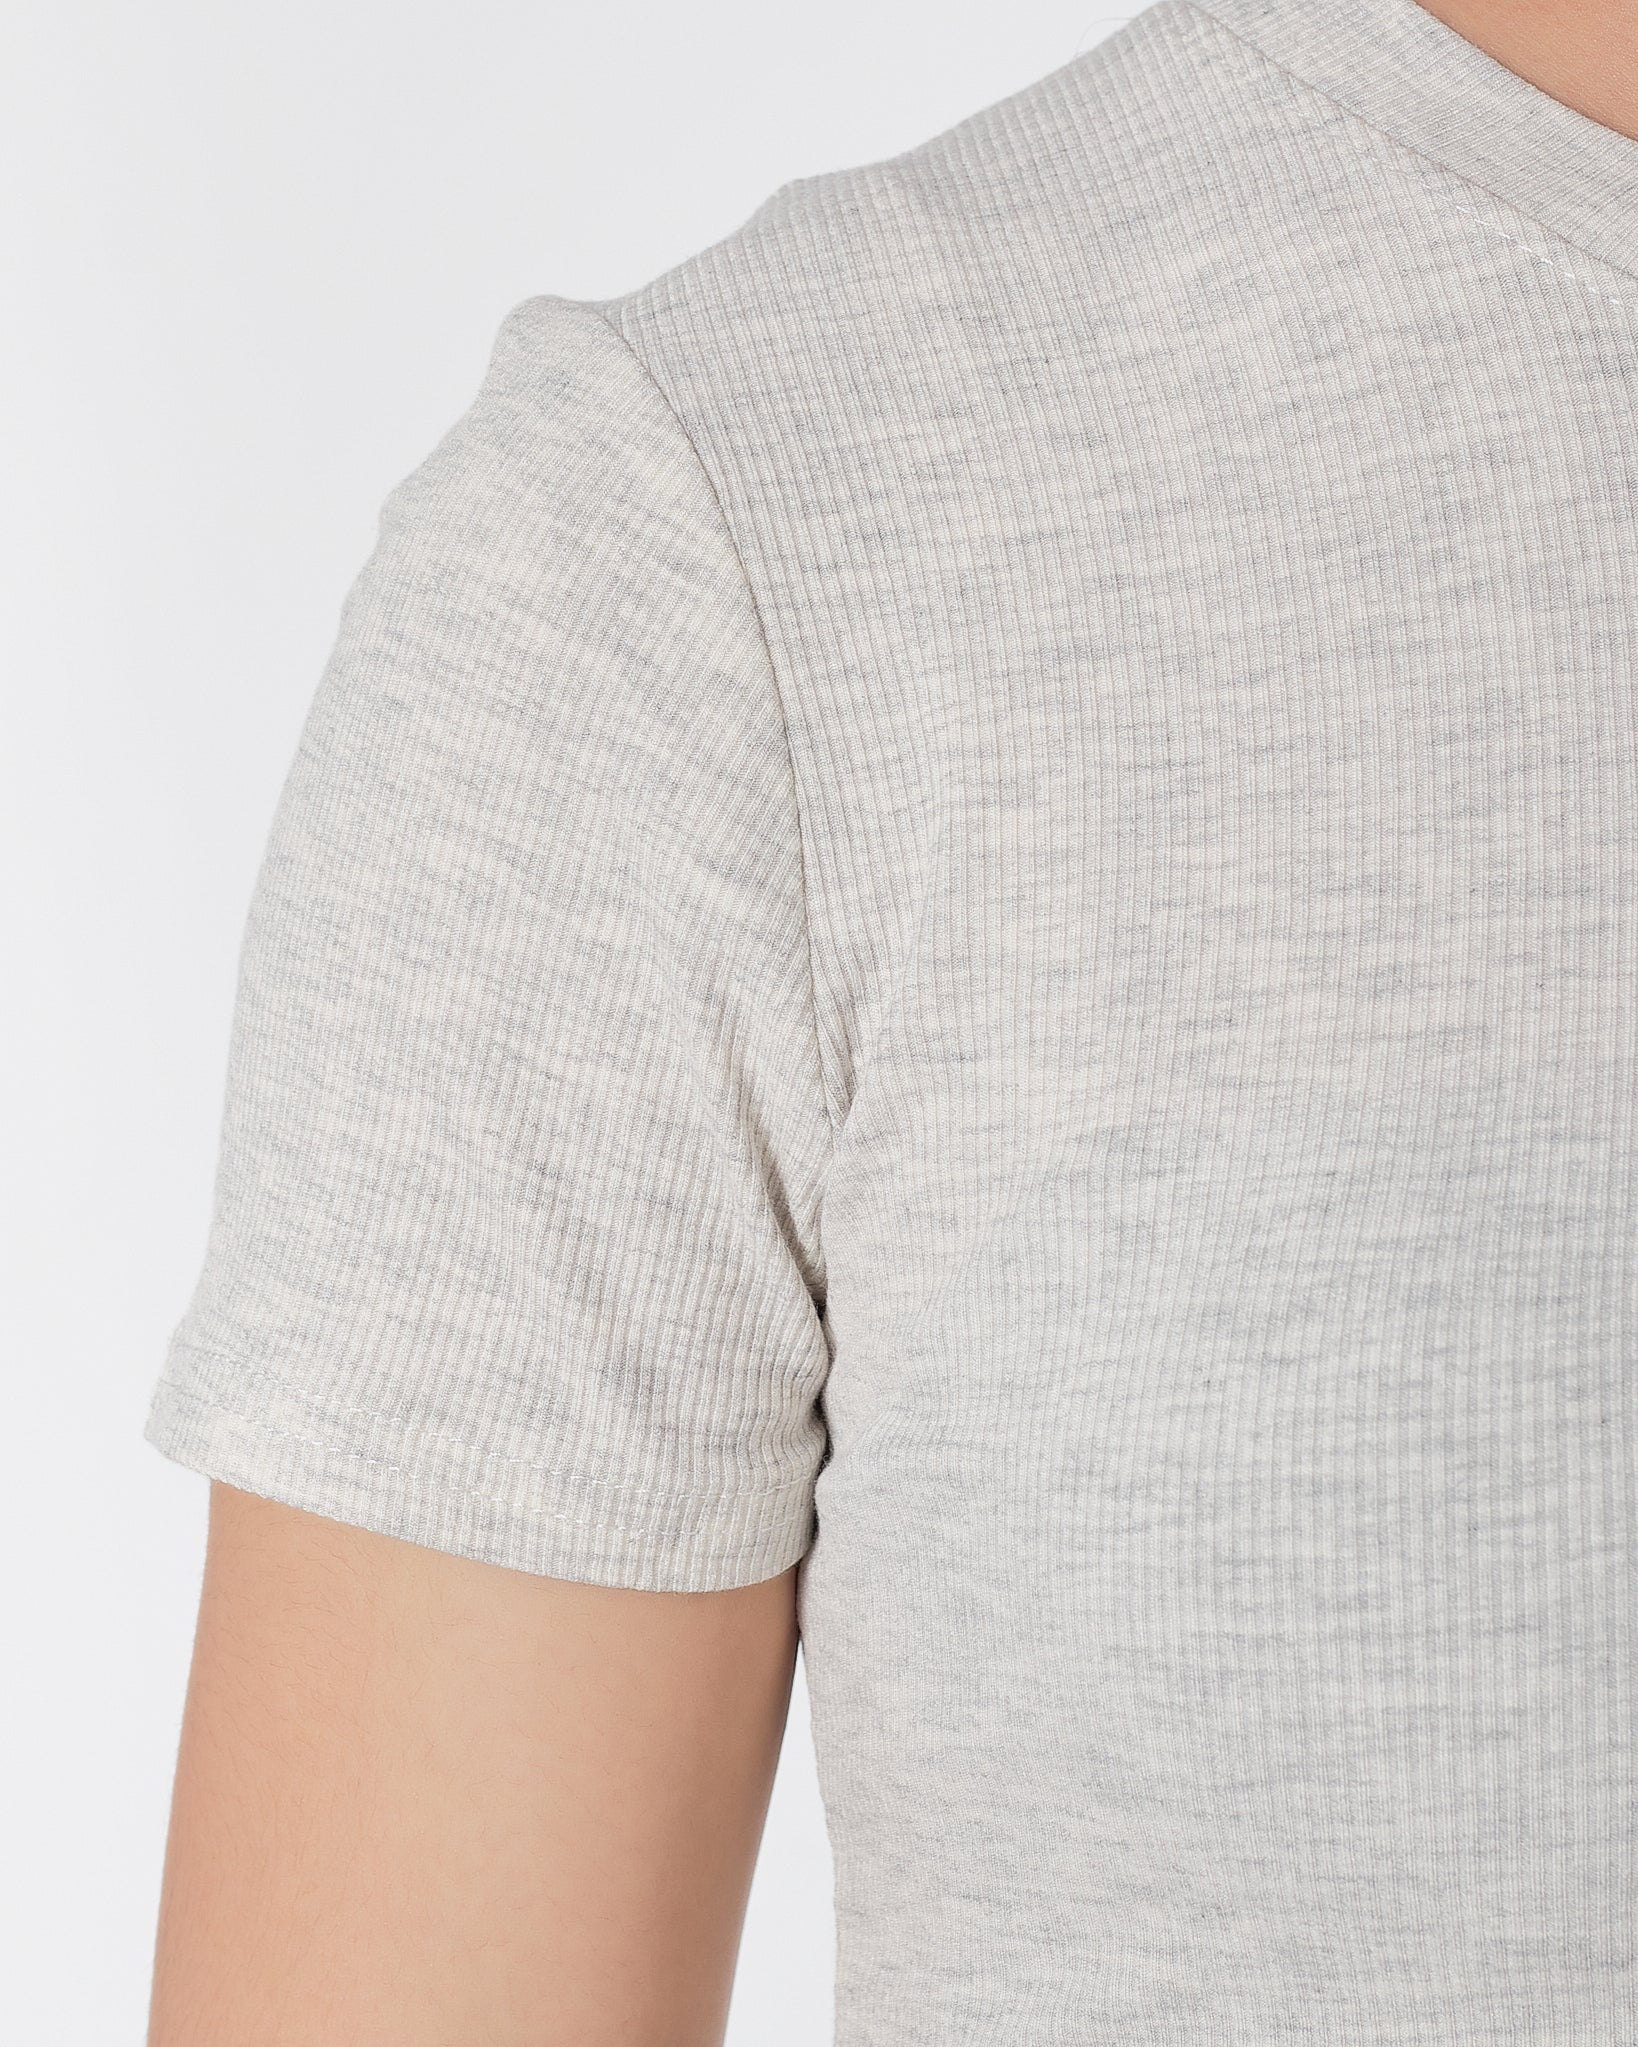 Plain Color Side String  Lady Light Grey T-Shirt 10.90